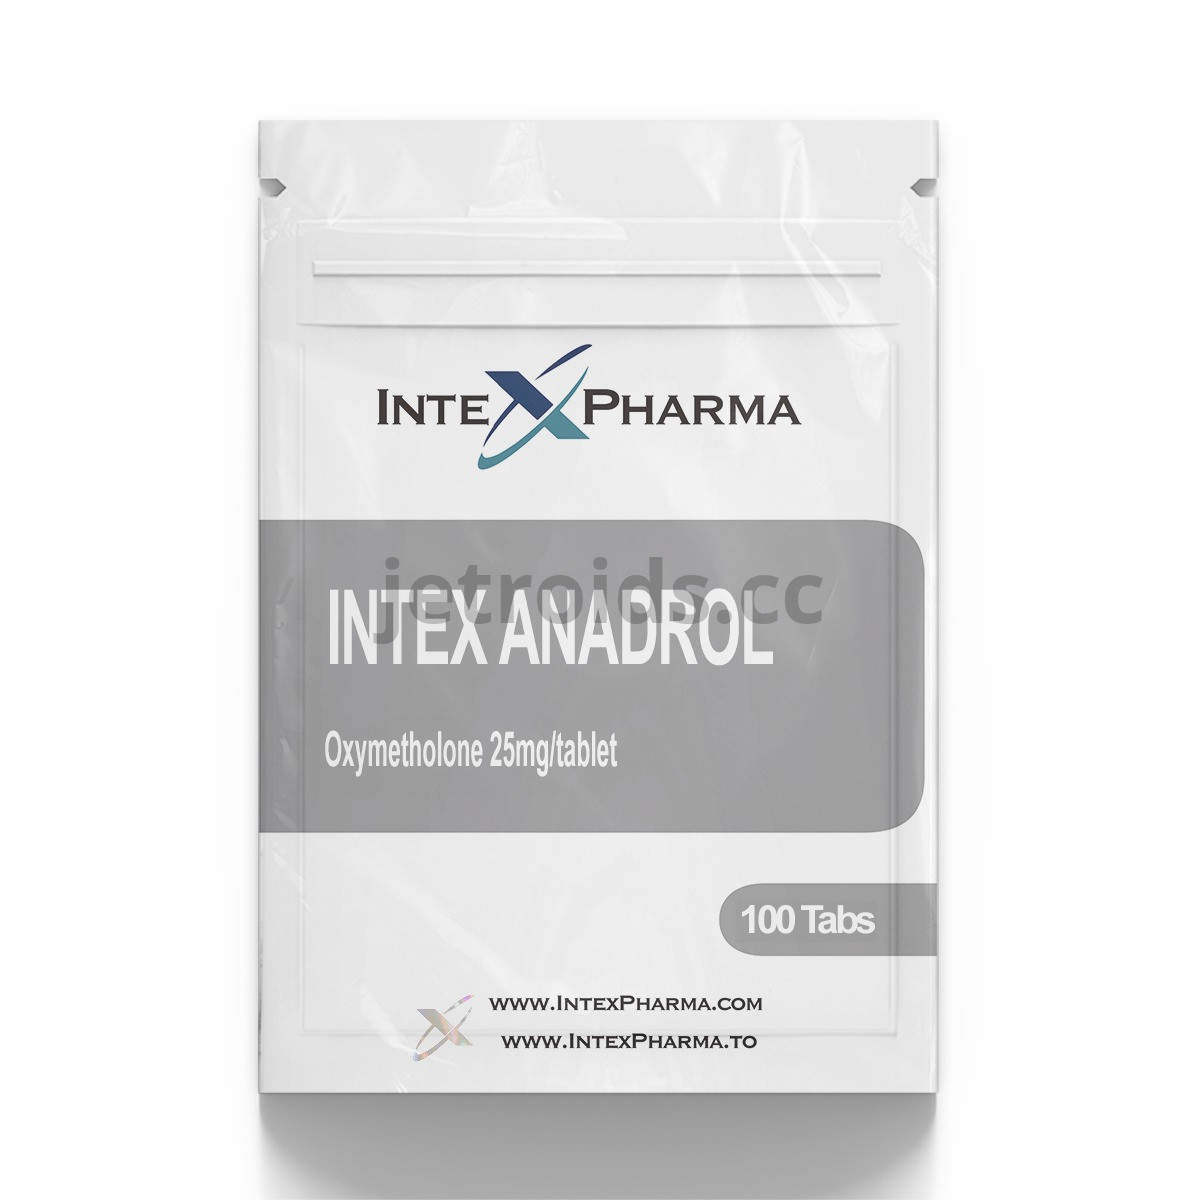 IntexPharma Intex Anadrol Product Info